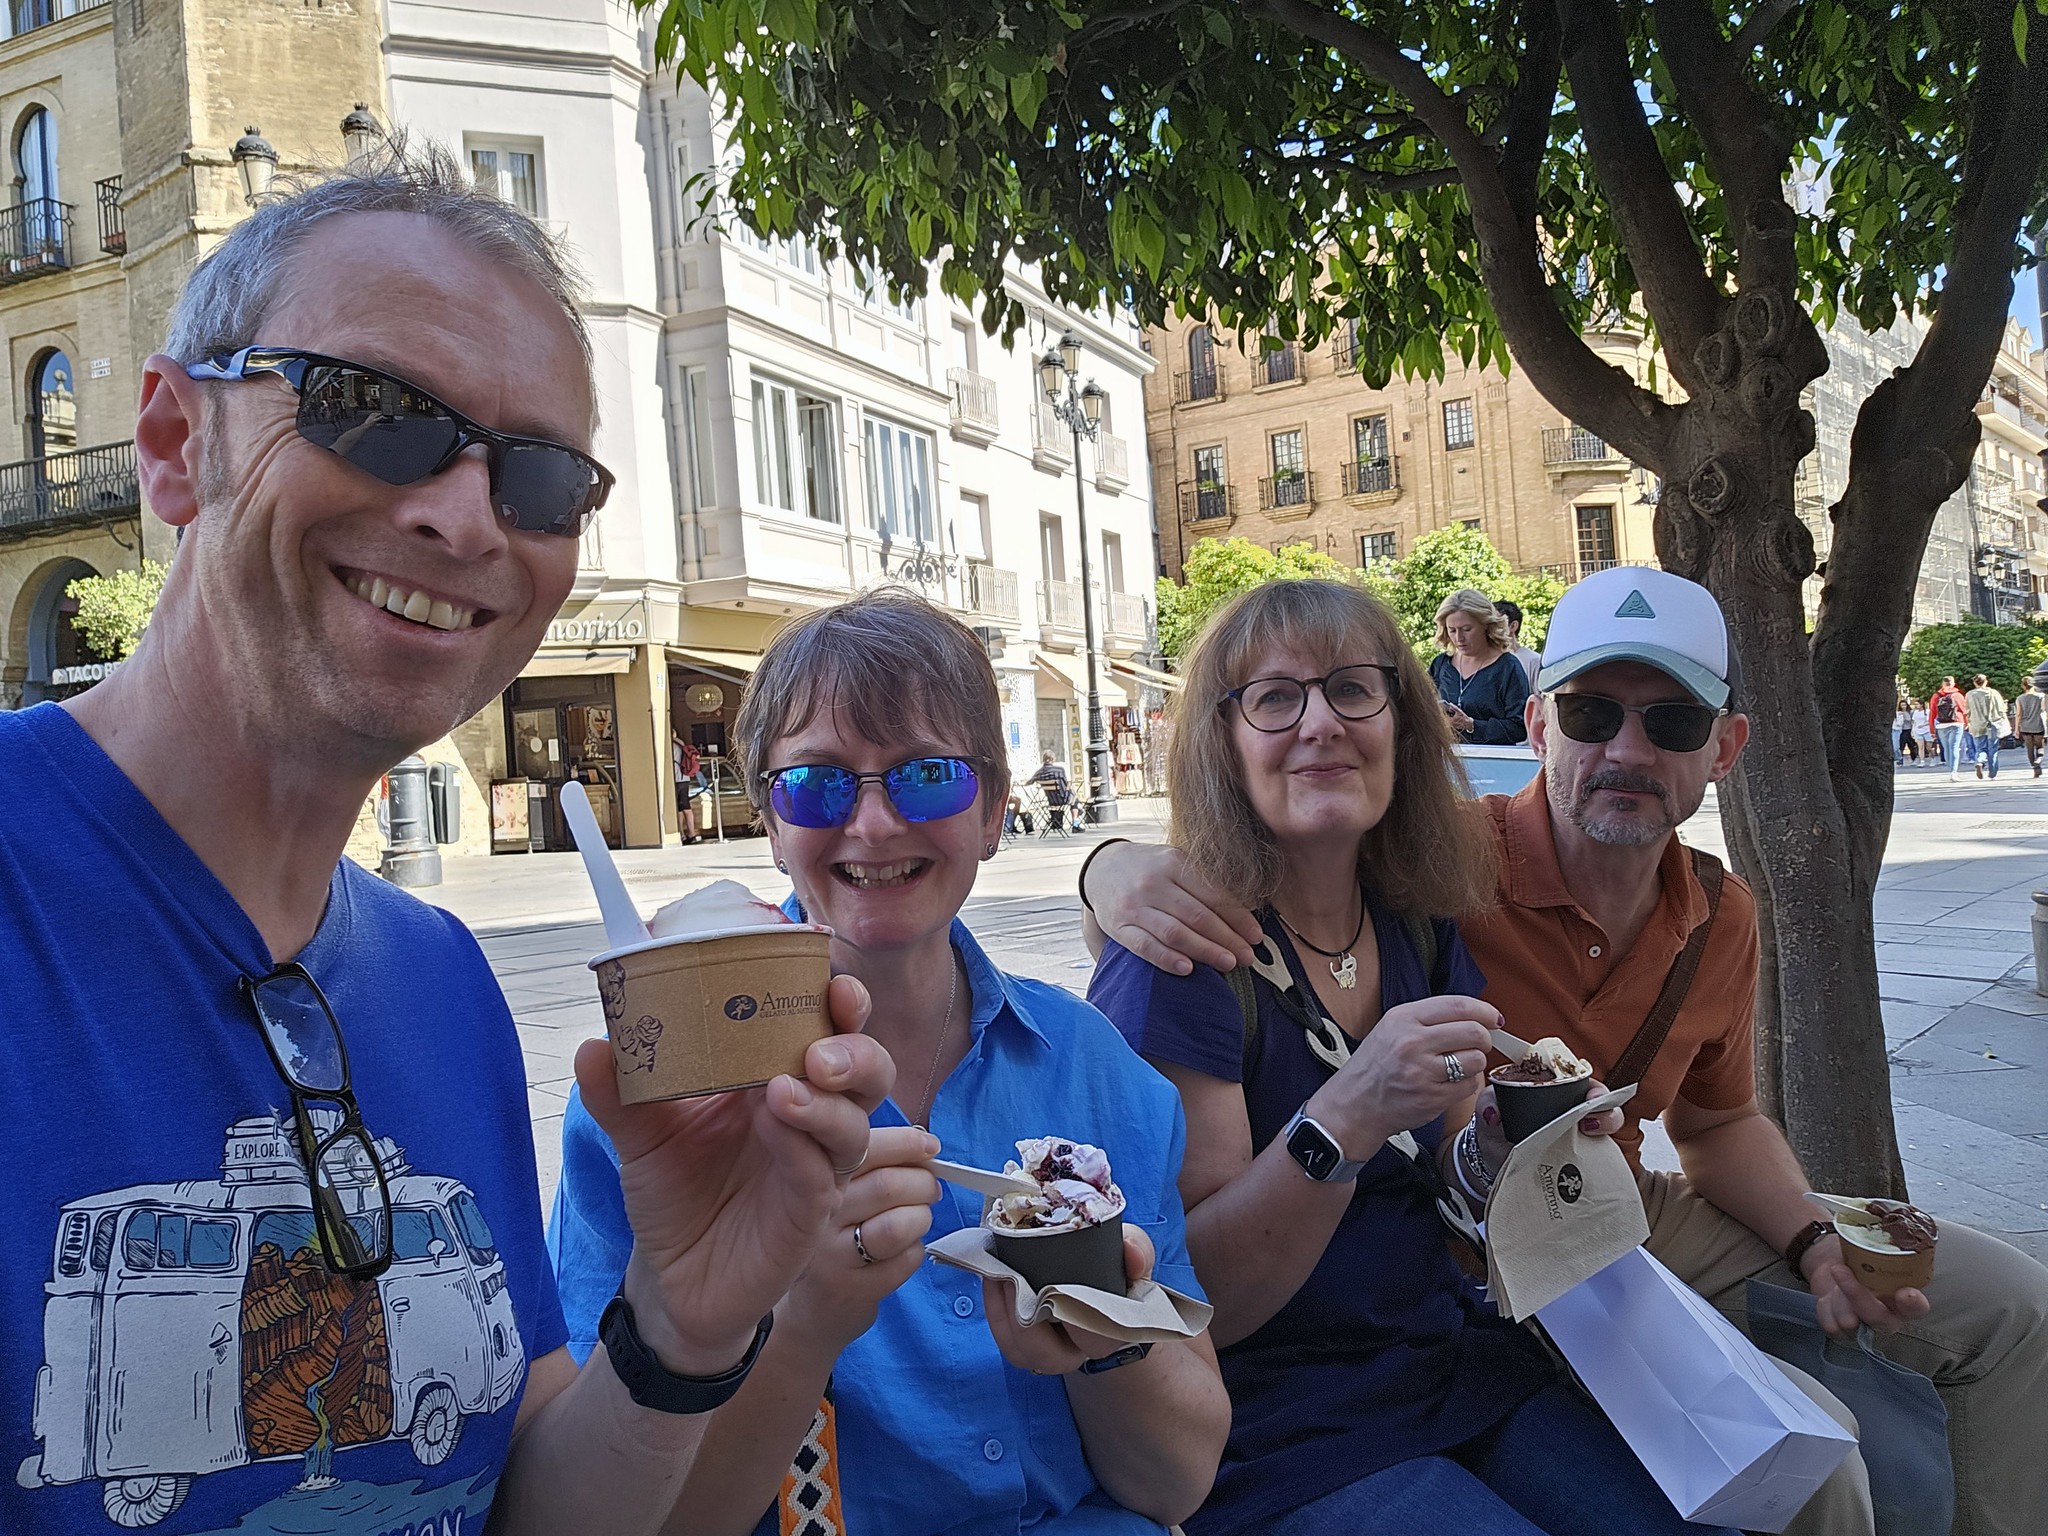 Eating ice cream in Seville